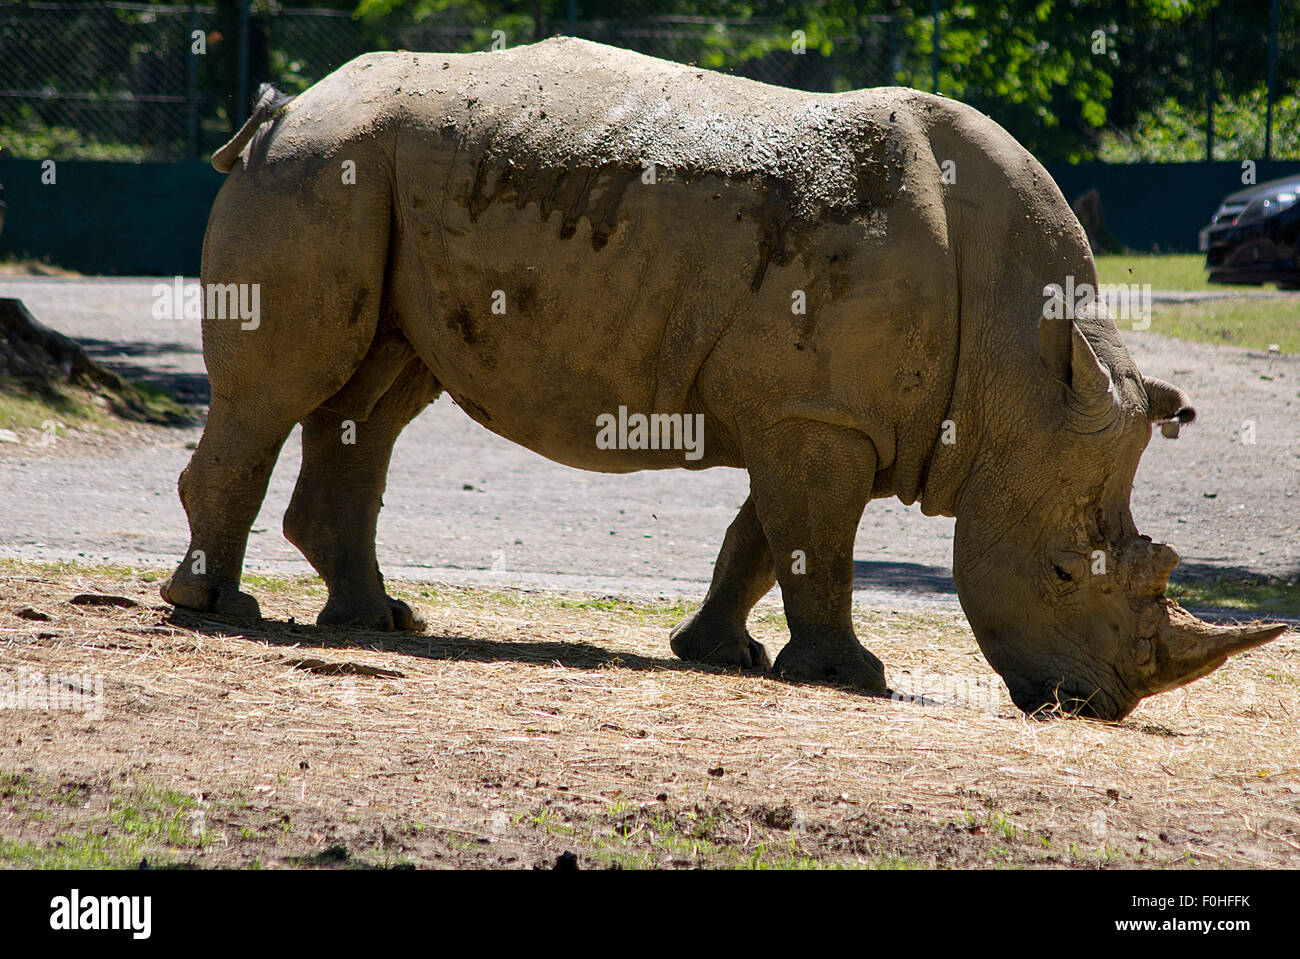 Museau rhinocéros dans l'avant-plan, le zoo rhino rhino, mange Banque D'Images